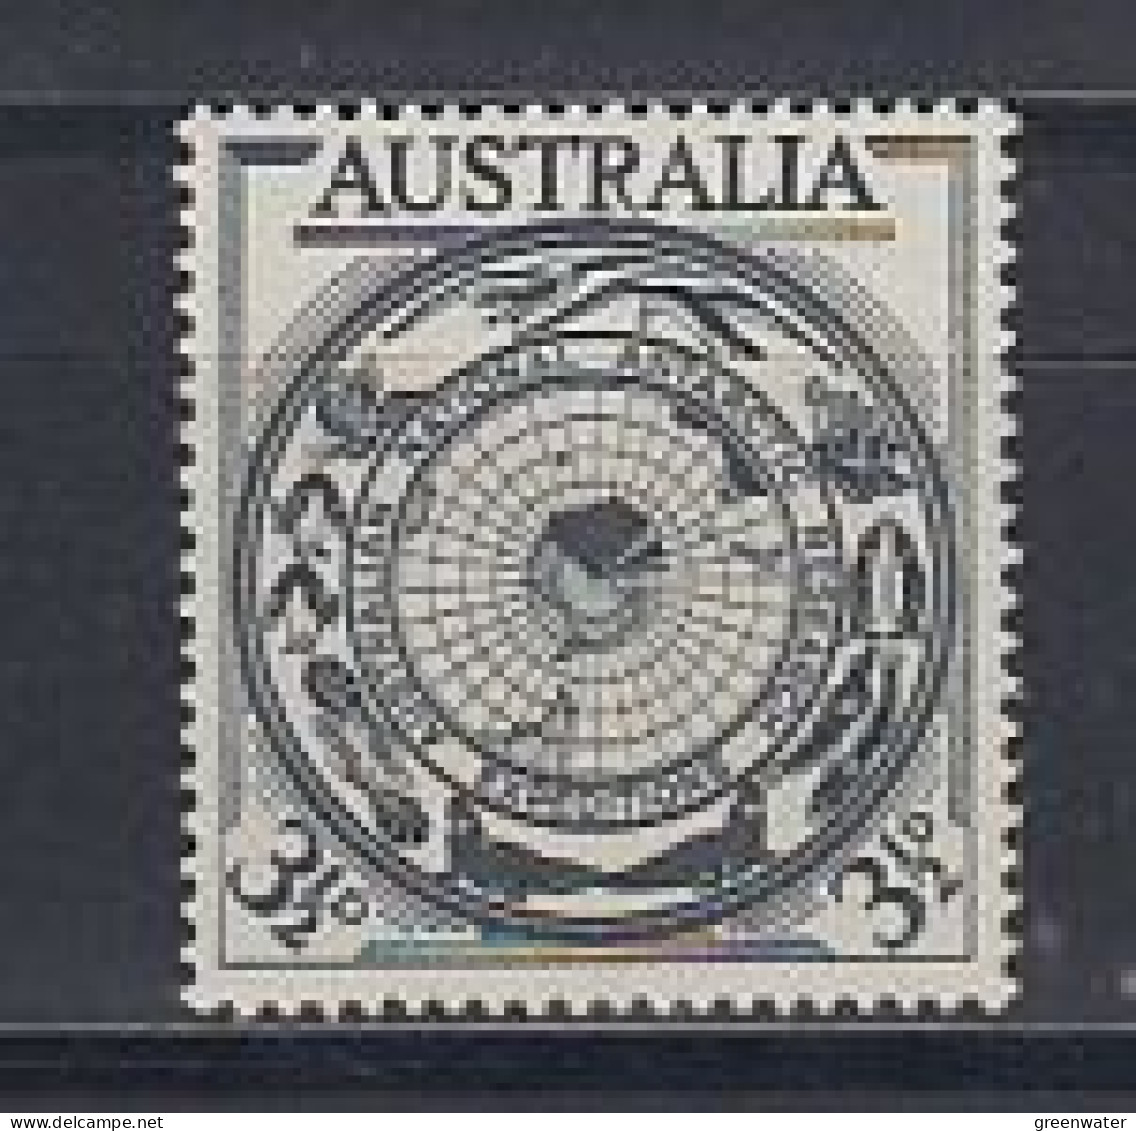 Australia 1954 Australian National Antarctic Expedition 1v ** Mnh (59879) - Neufs